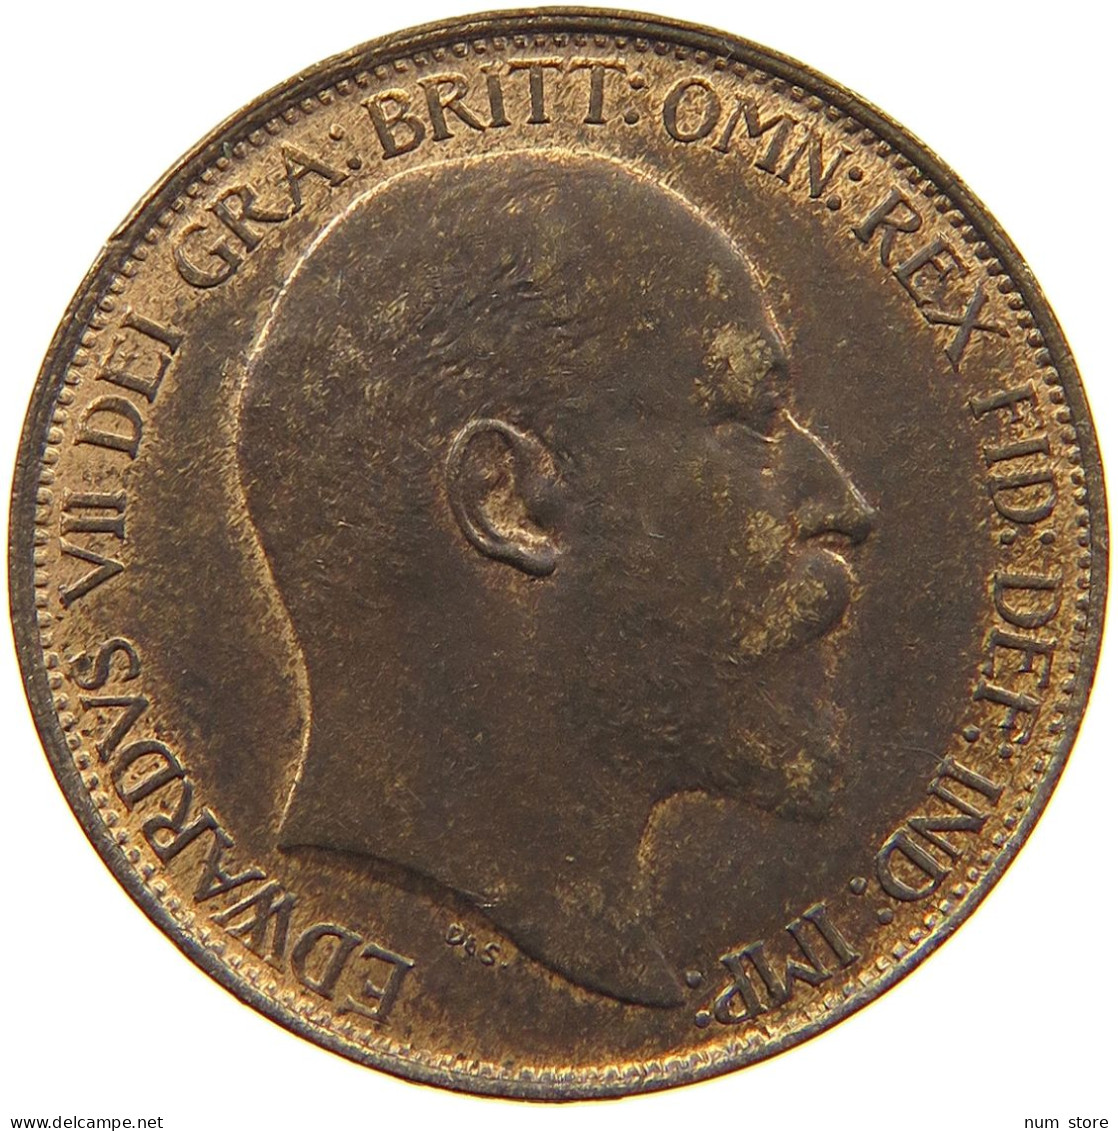 GREAT BRITAIN HALF PENNY 1903 Edward VII., 1901 - 1910 #t077 0385 - C. 1/2 Penny